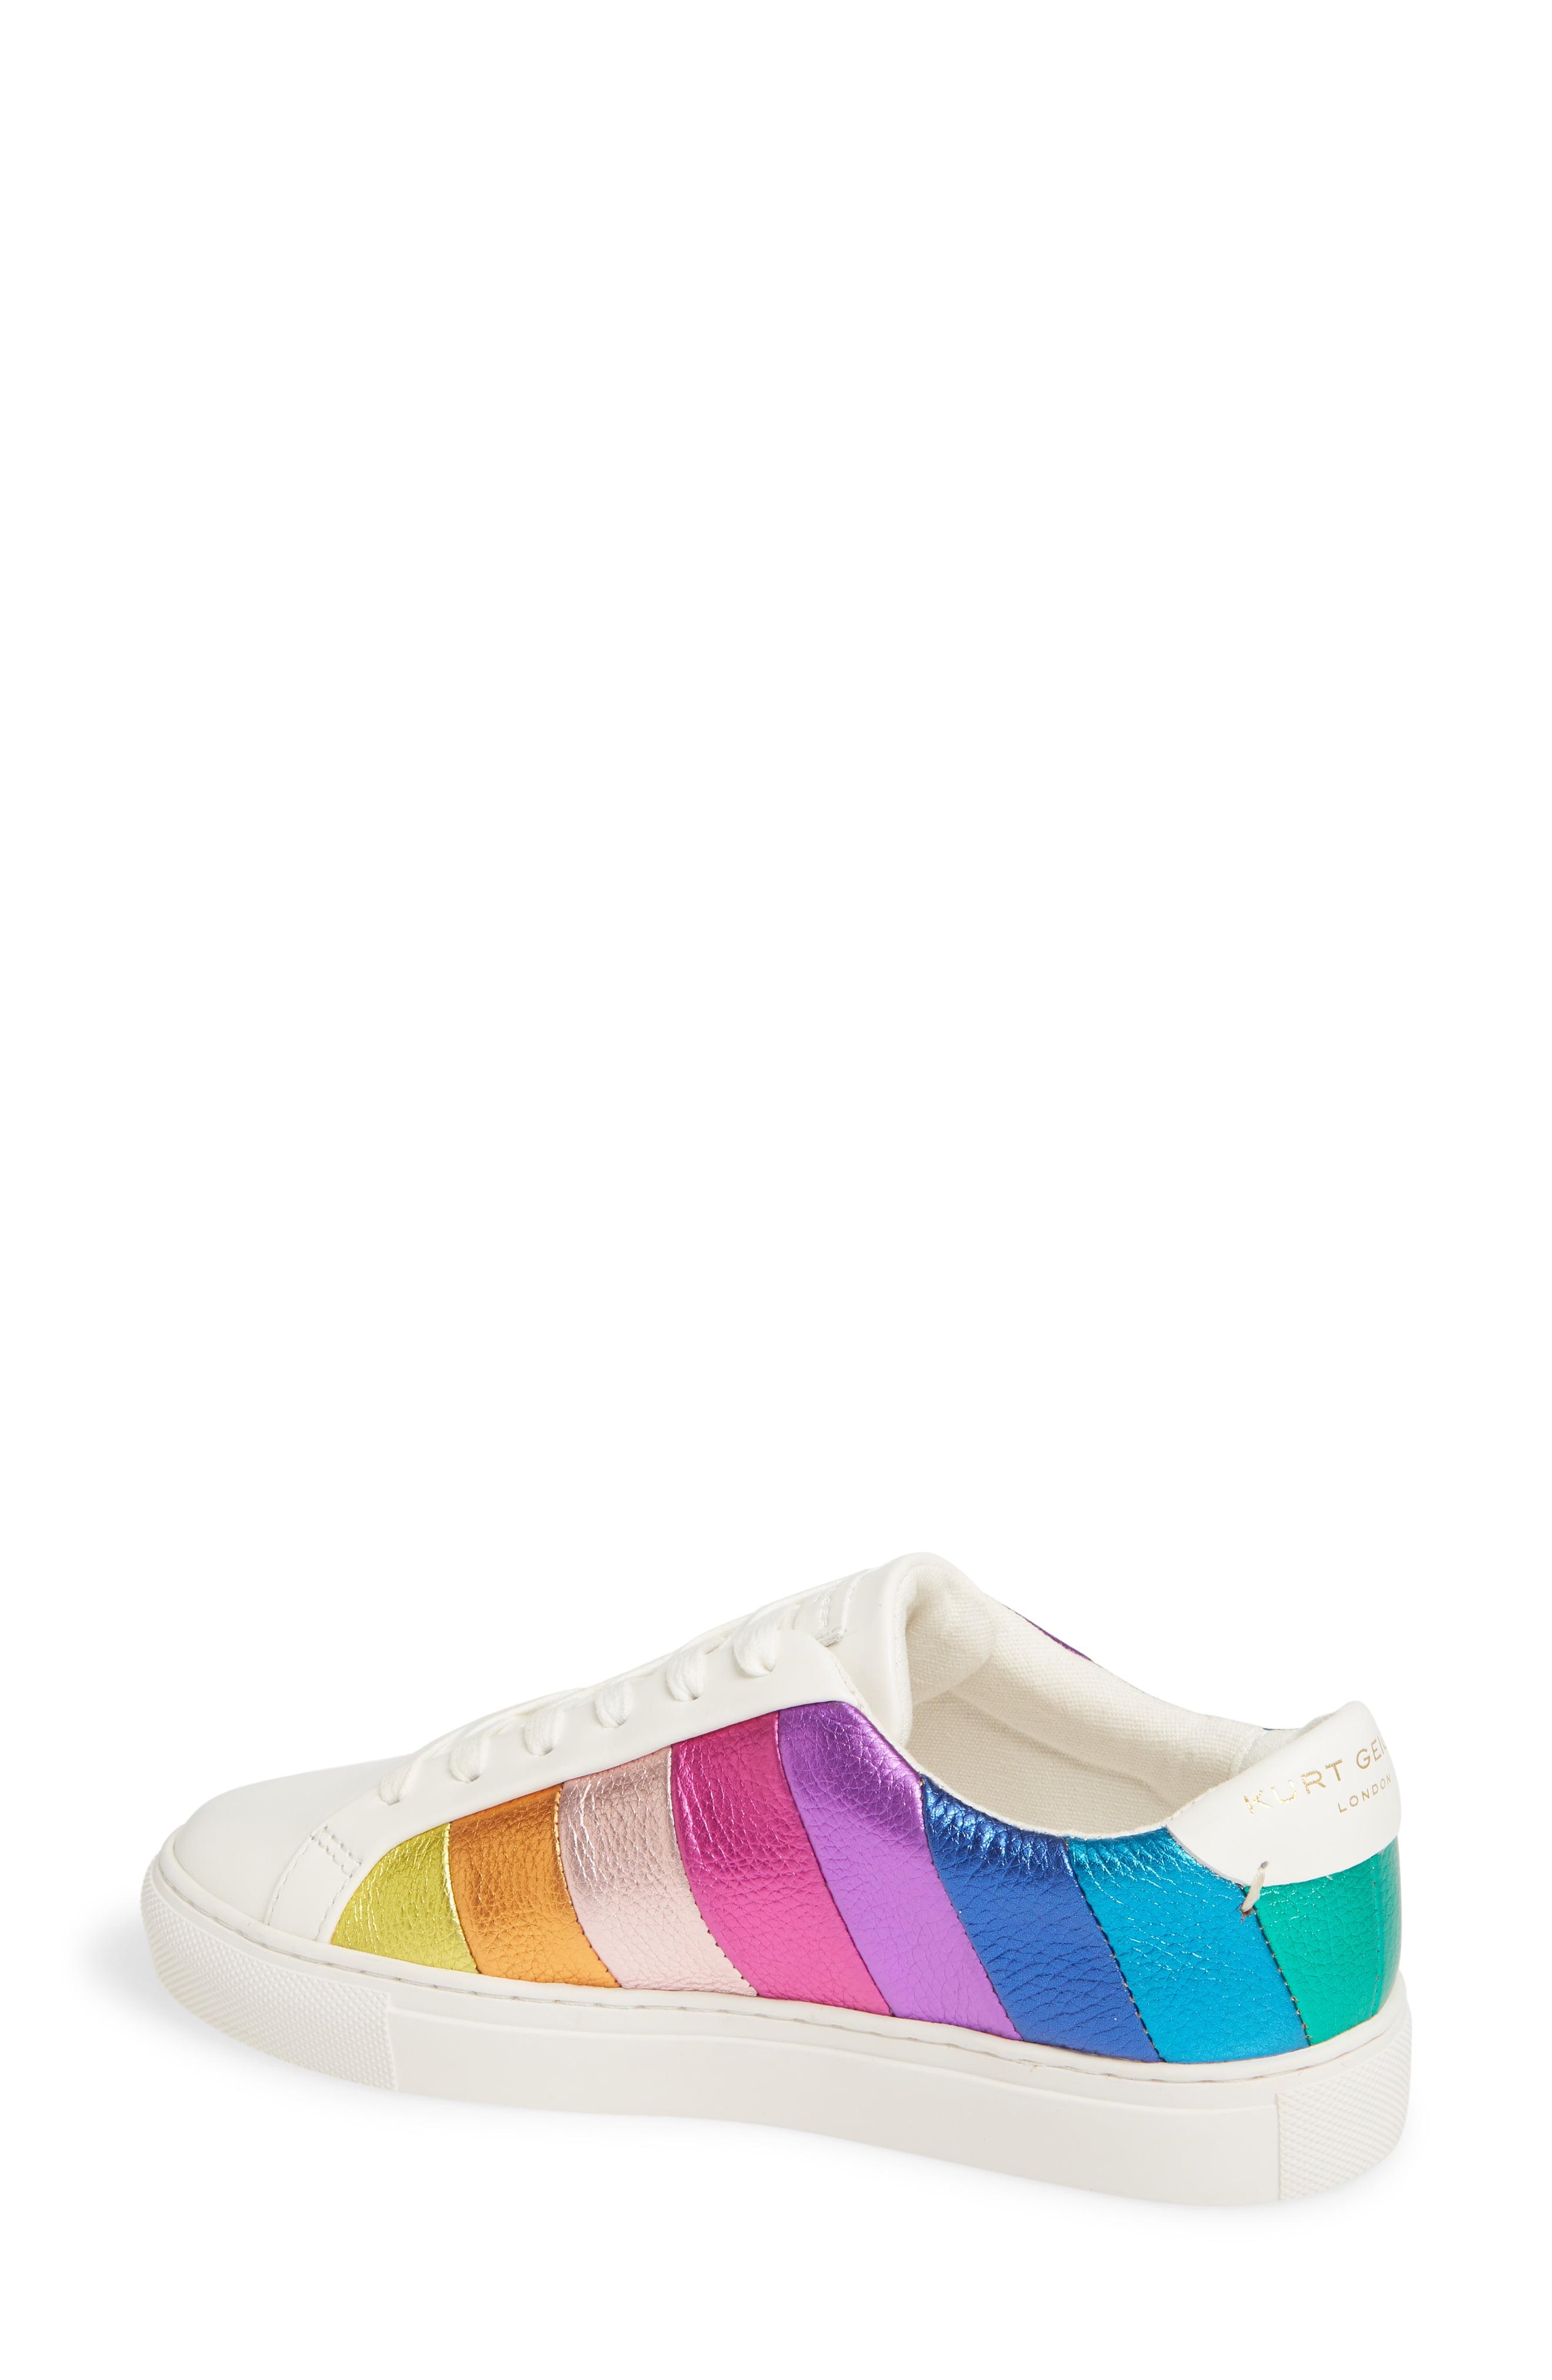 kurt geiger rainbow sneakers